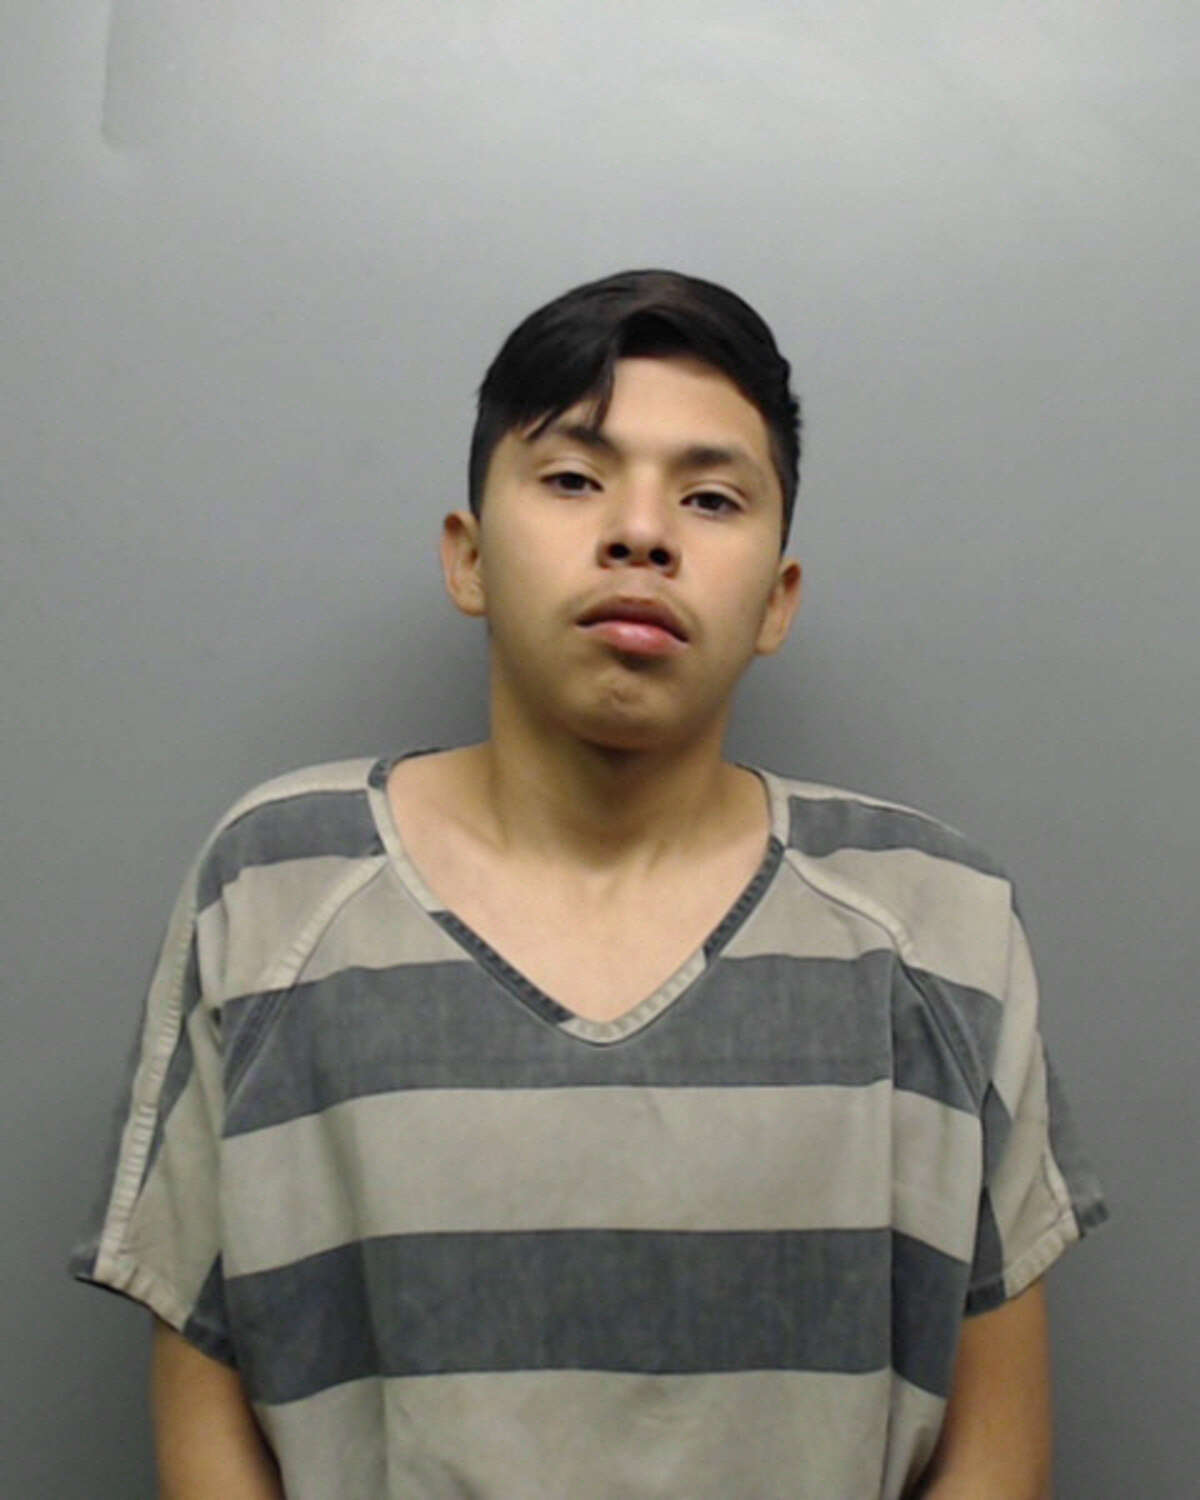 Reymundo Saucedo, 17, was charged with harboring a runaway.